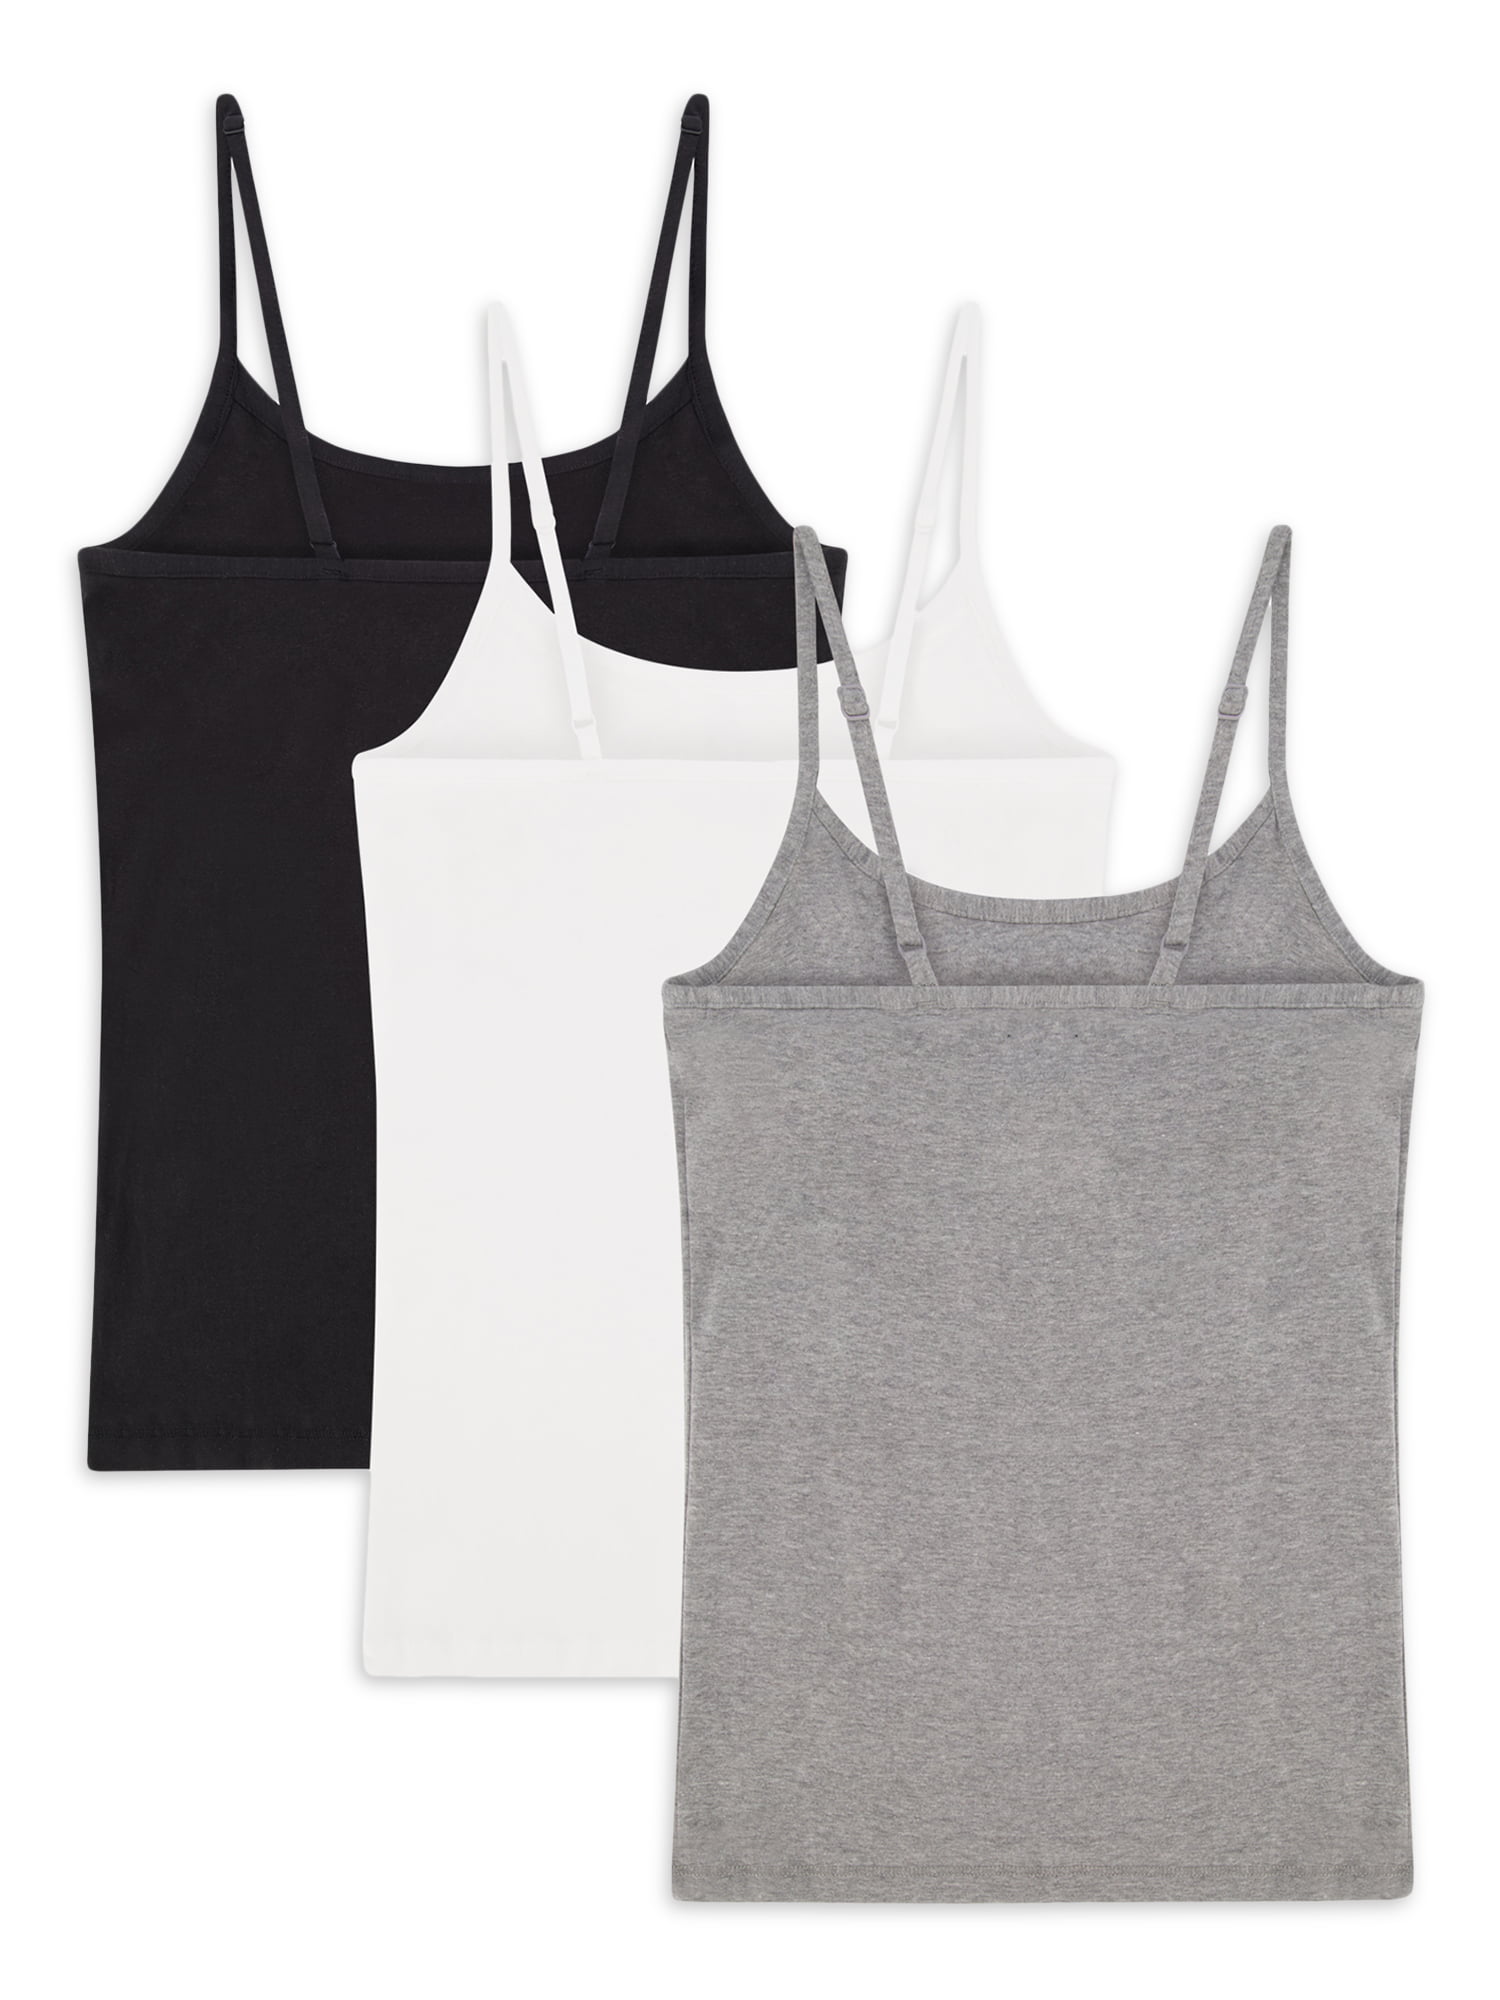 adviicd Tank Top Body Suits Women Cotton Shelf Bra soles Adjustable  Spaghetti Strap Tank Tops Scoop Neck Layer White M 